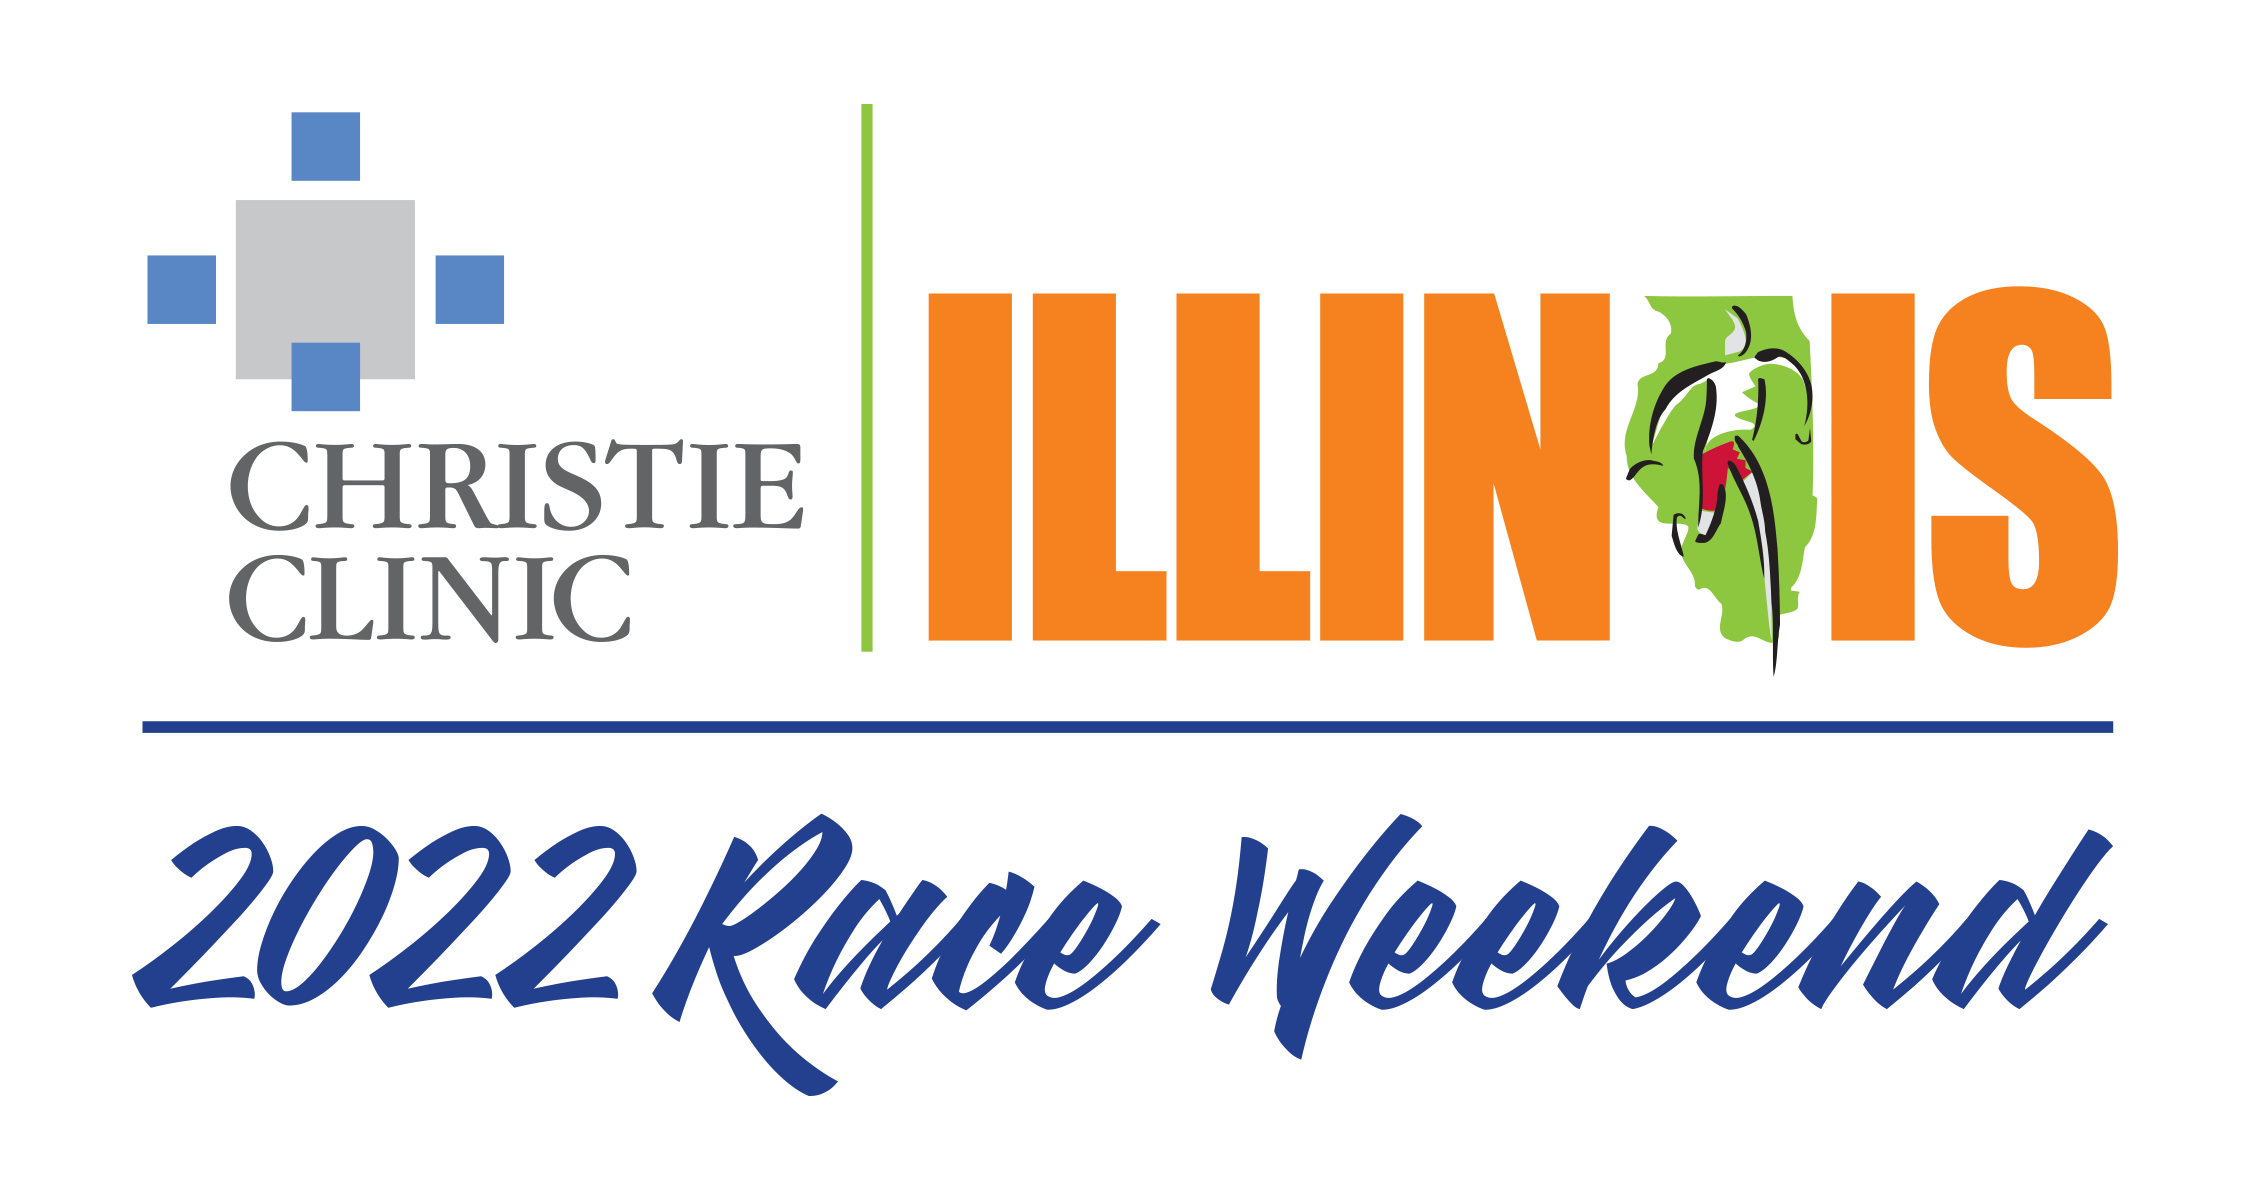 Christie Clinic Illinois Marathon logo on RaceRaves